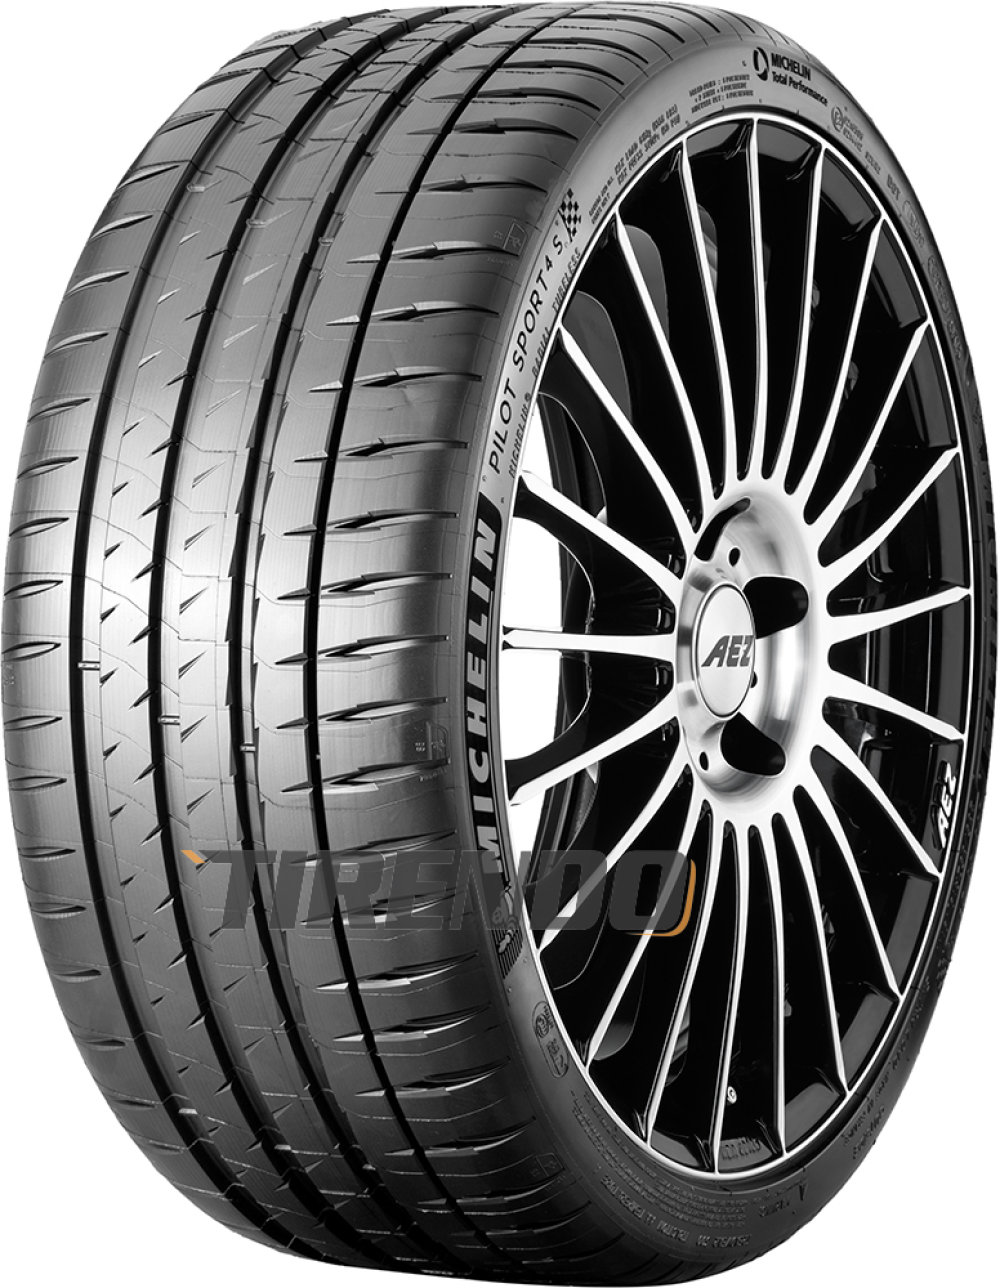 Site line udelukkende Duke Michelin Pilot Sport 4S 255 / 30 19 91 (Y) - Tirendo.dk